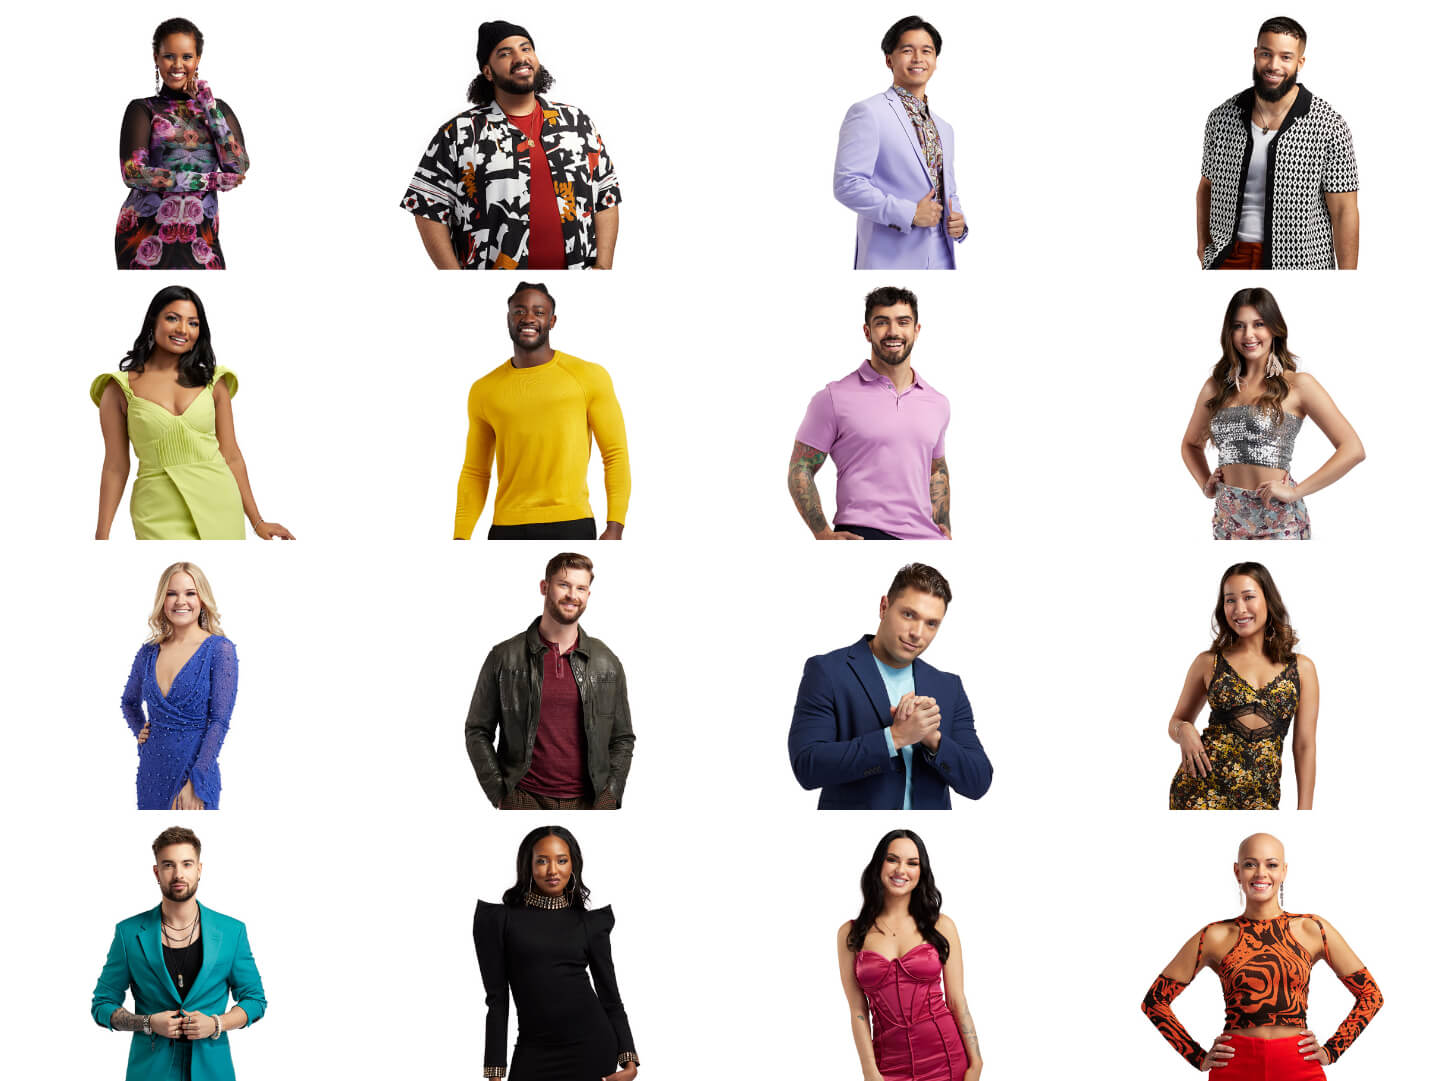 Meet Big Brother Canada Season 11 Houseguests